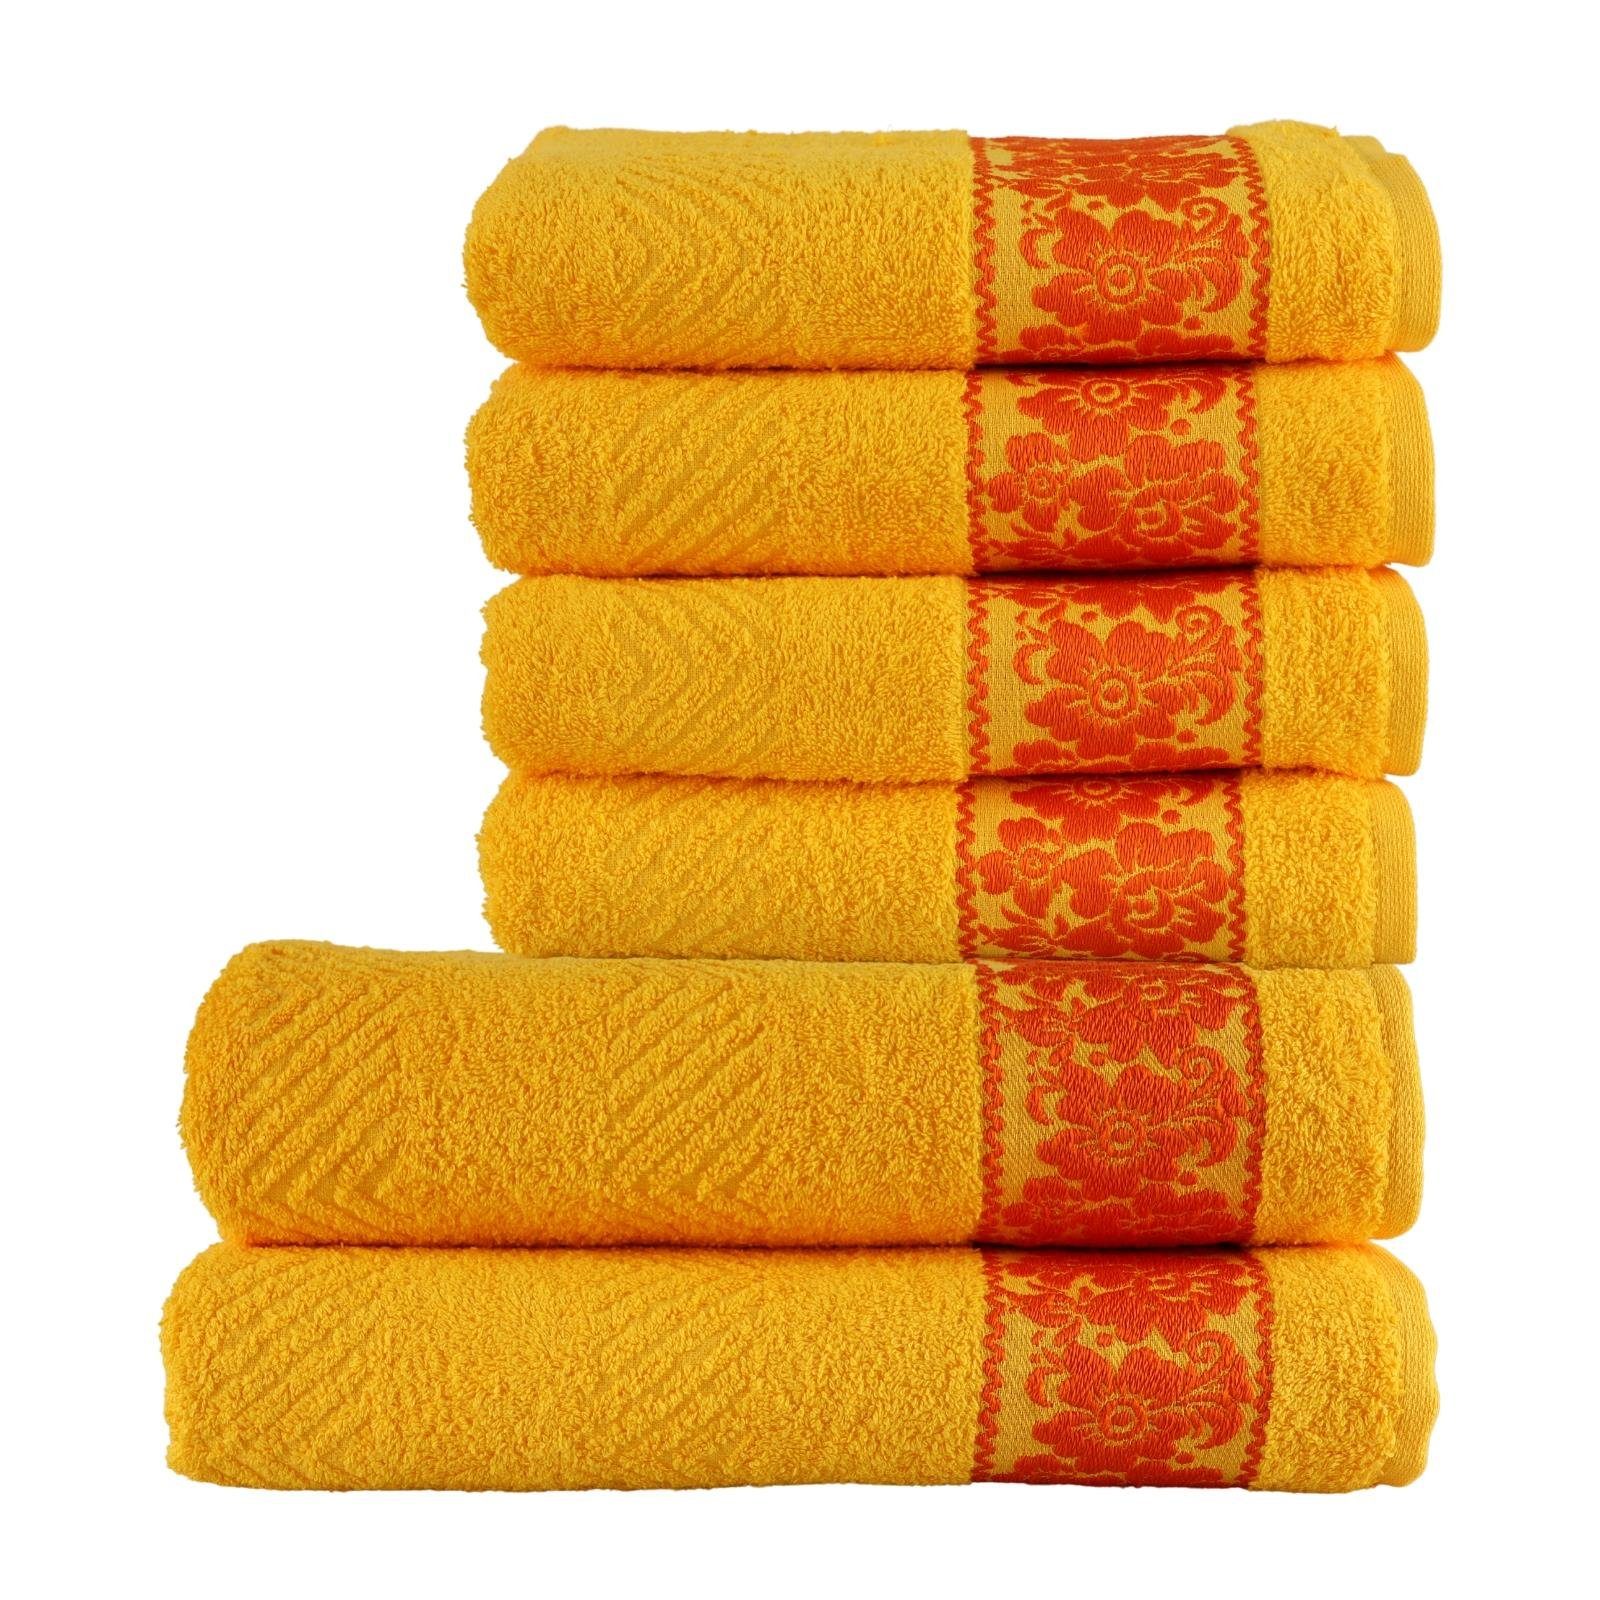 Plentyfy Handtücher Hand- &Duschtuch Set 6tlg aus 100% Baumwolle, 100% Baumwolle (6-St), Duschhandtuch - Frottee Handtuch Set - Badetuch | Alle Handtücher